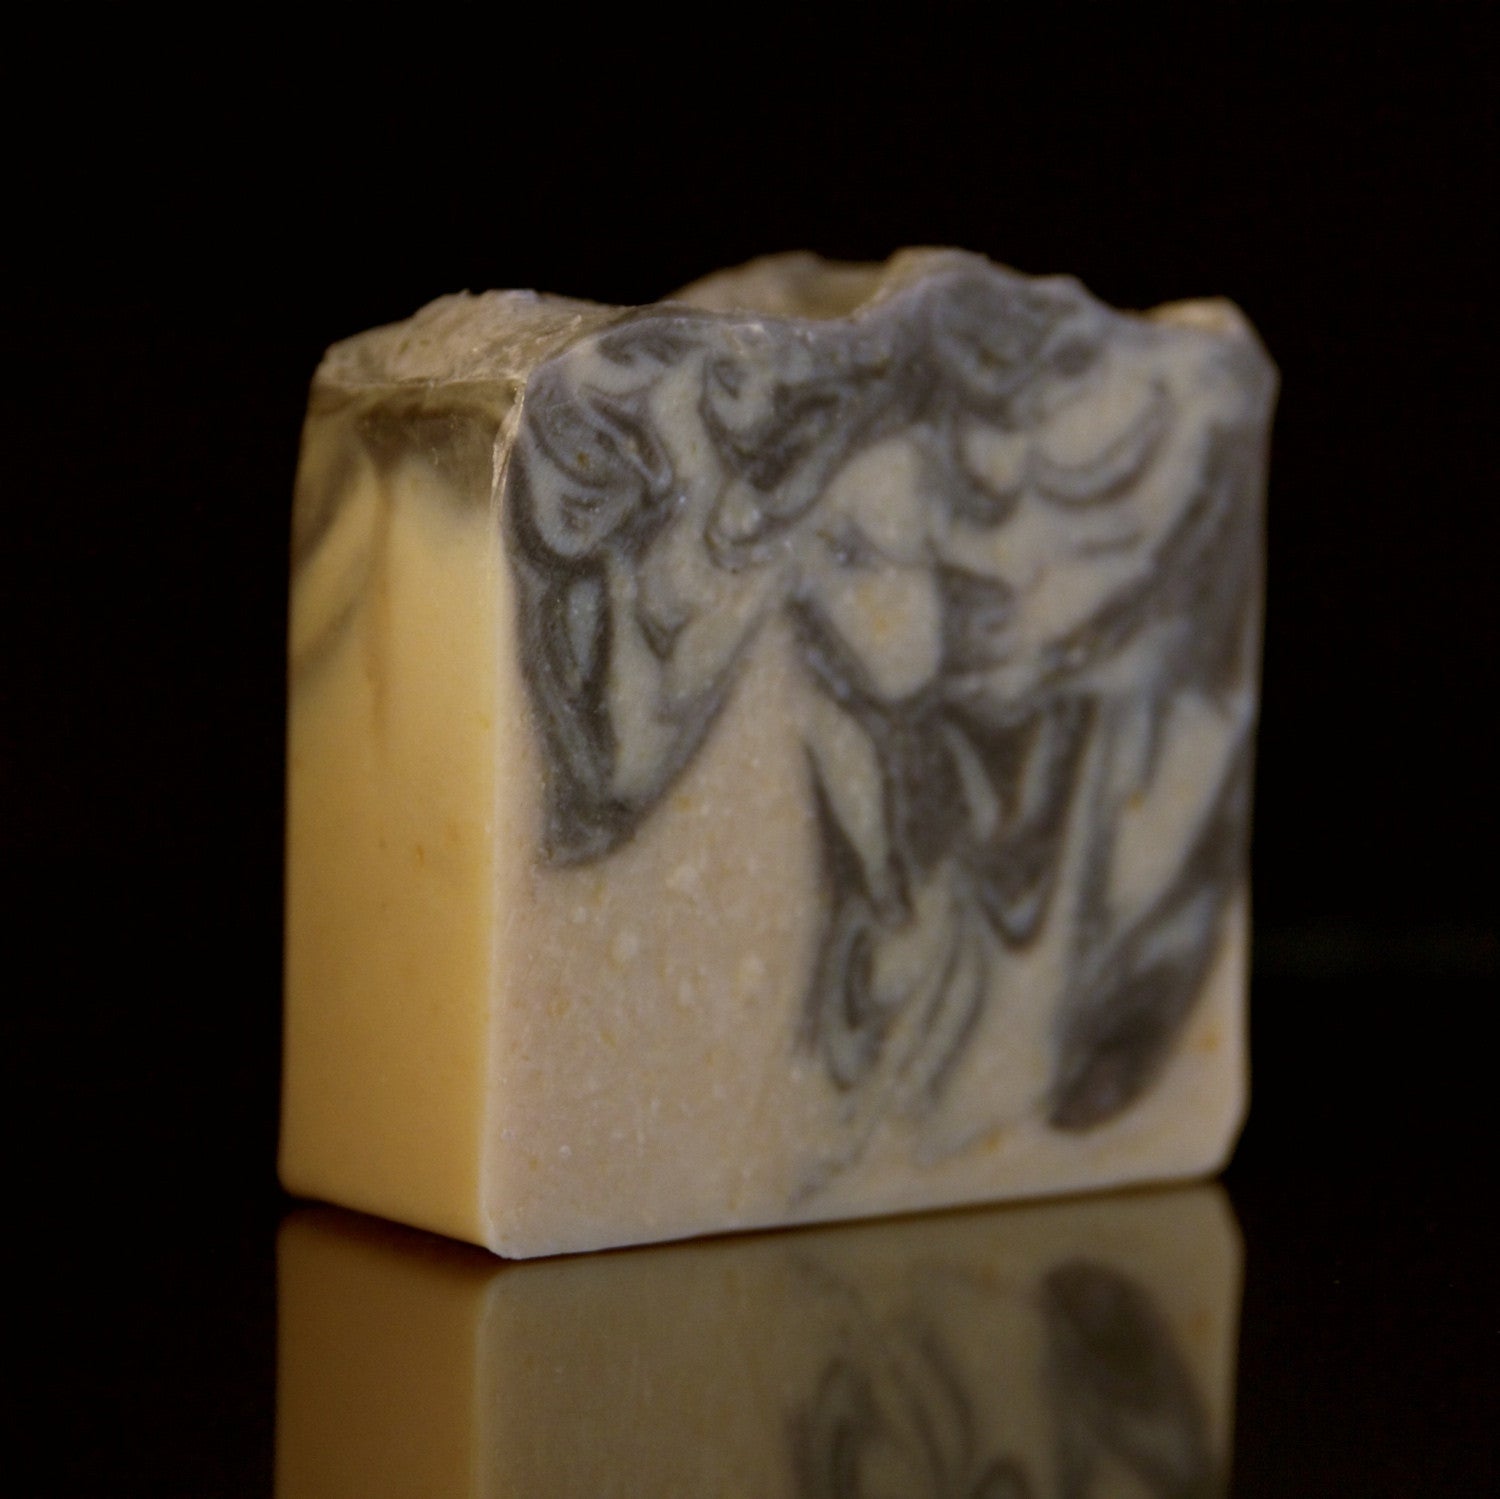 Man Soap - More than just an ordinary bar of soap